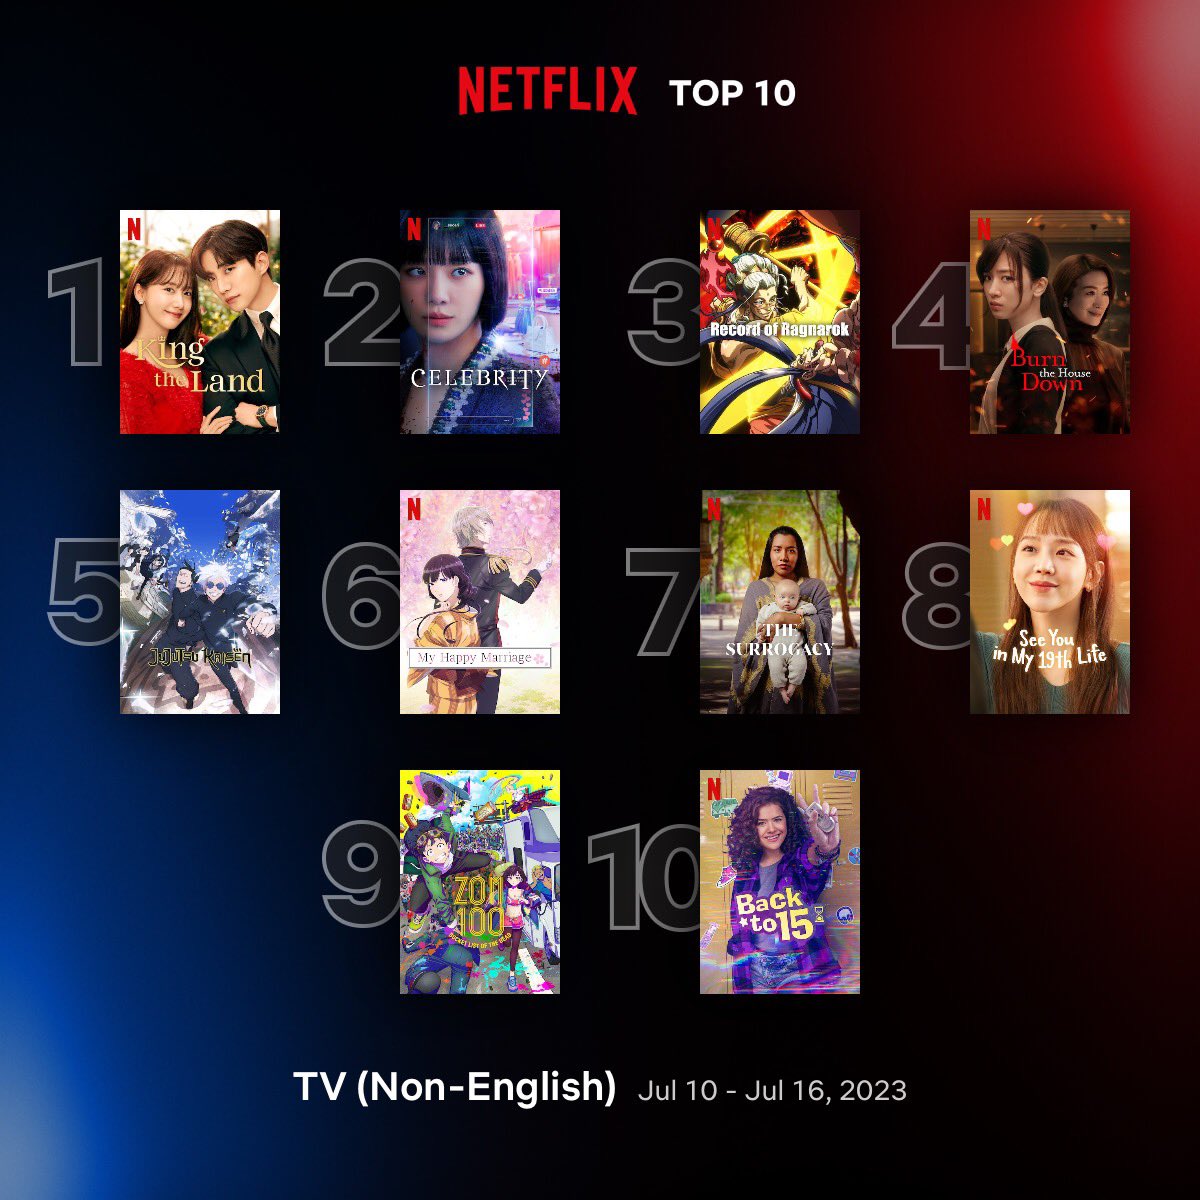 Global Top 10 Non-English TV Series on Netflix between 10 - 16 July:

1. #KingTheLand 🇰🇷
2. #Celebrity 🇰🇷
3. #RecordofRagnarokS2 🇯🇵
4. #BurnTheHouseDown 🇯🇵
5. #JujutsuKaisen S2 🇯🇵
6. #MyHappyMarriage 🇯🇵
7. #TheSurrogacy 🇲🇽
8. #SeeYouInMy19thLife 🇰🇷
9. #Zom100: Bucket List of the…